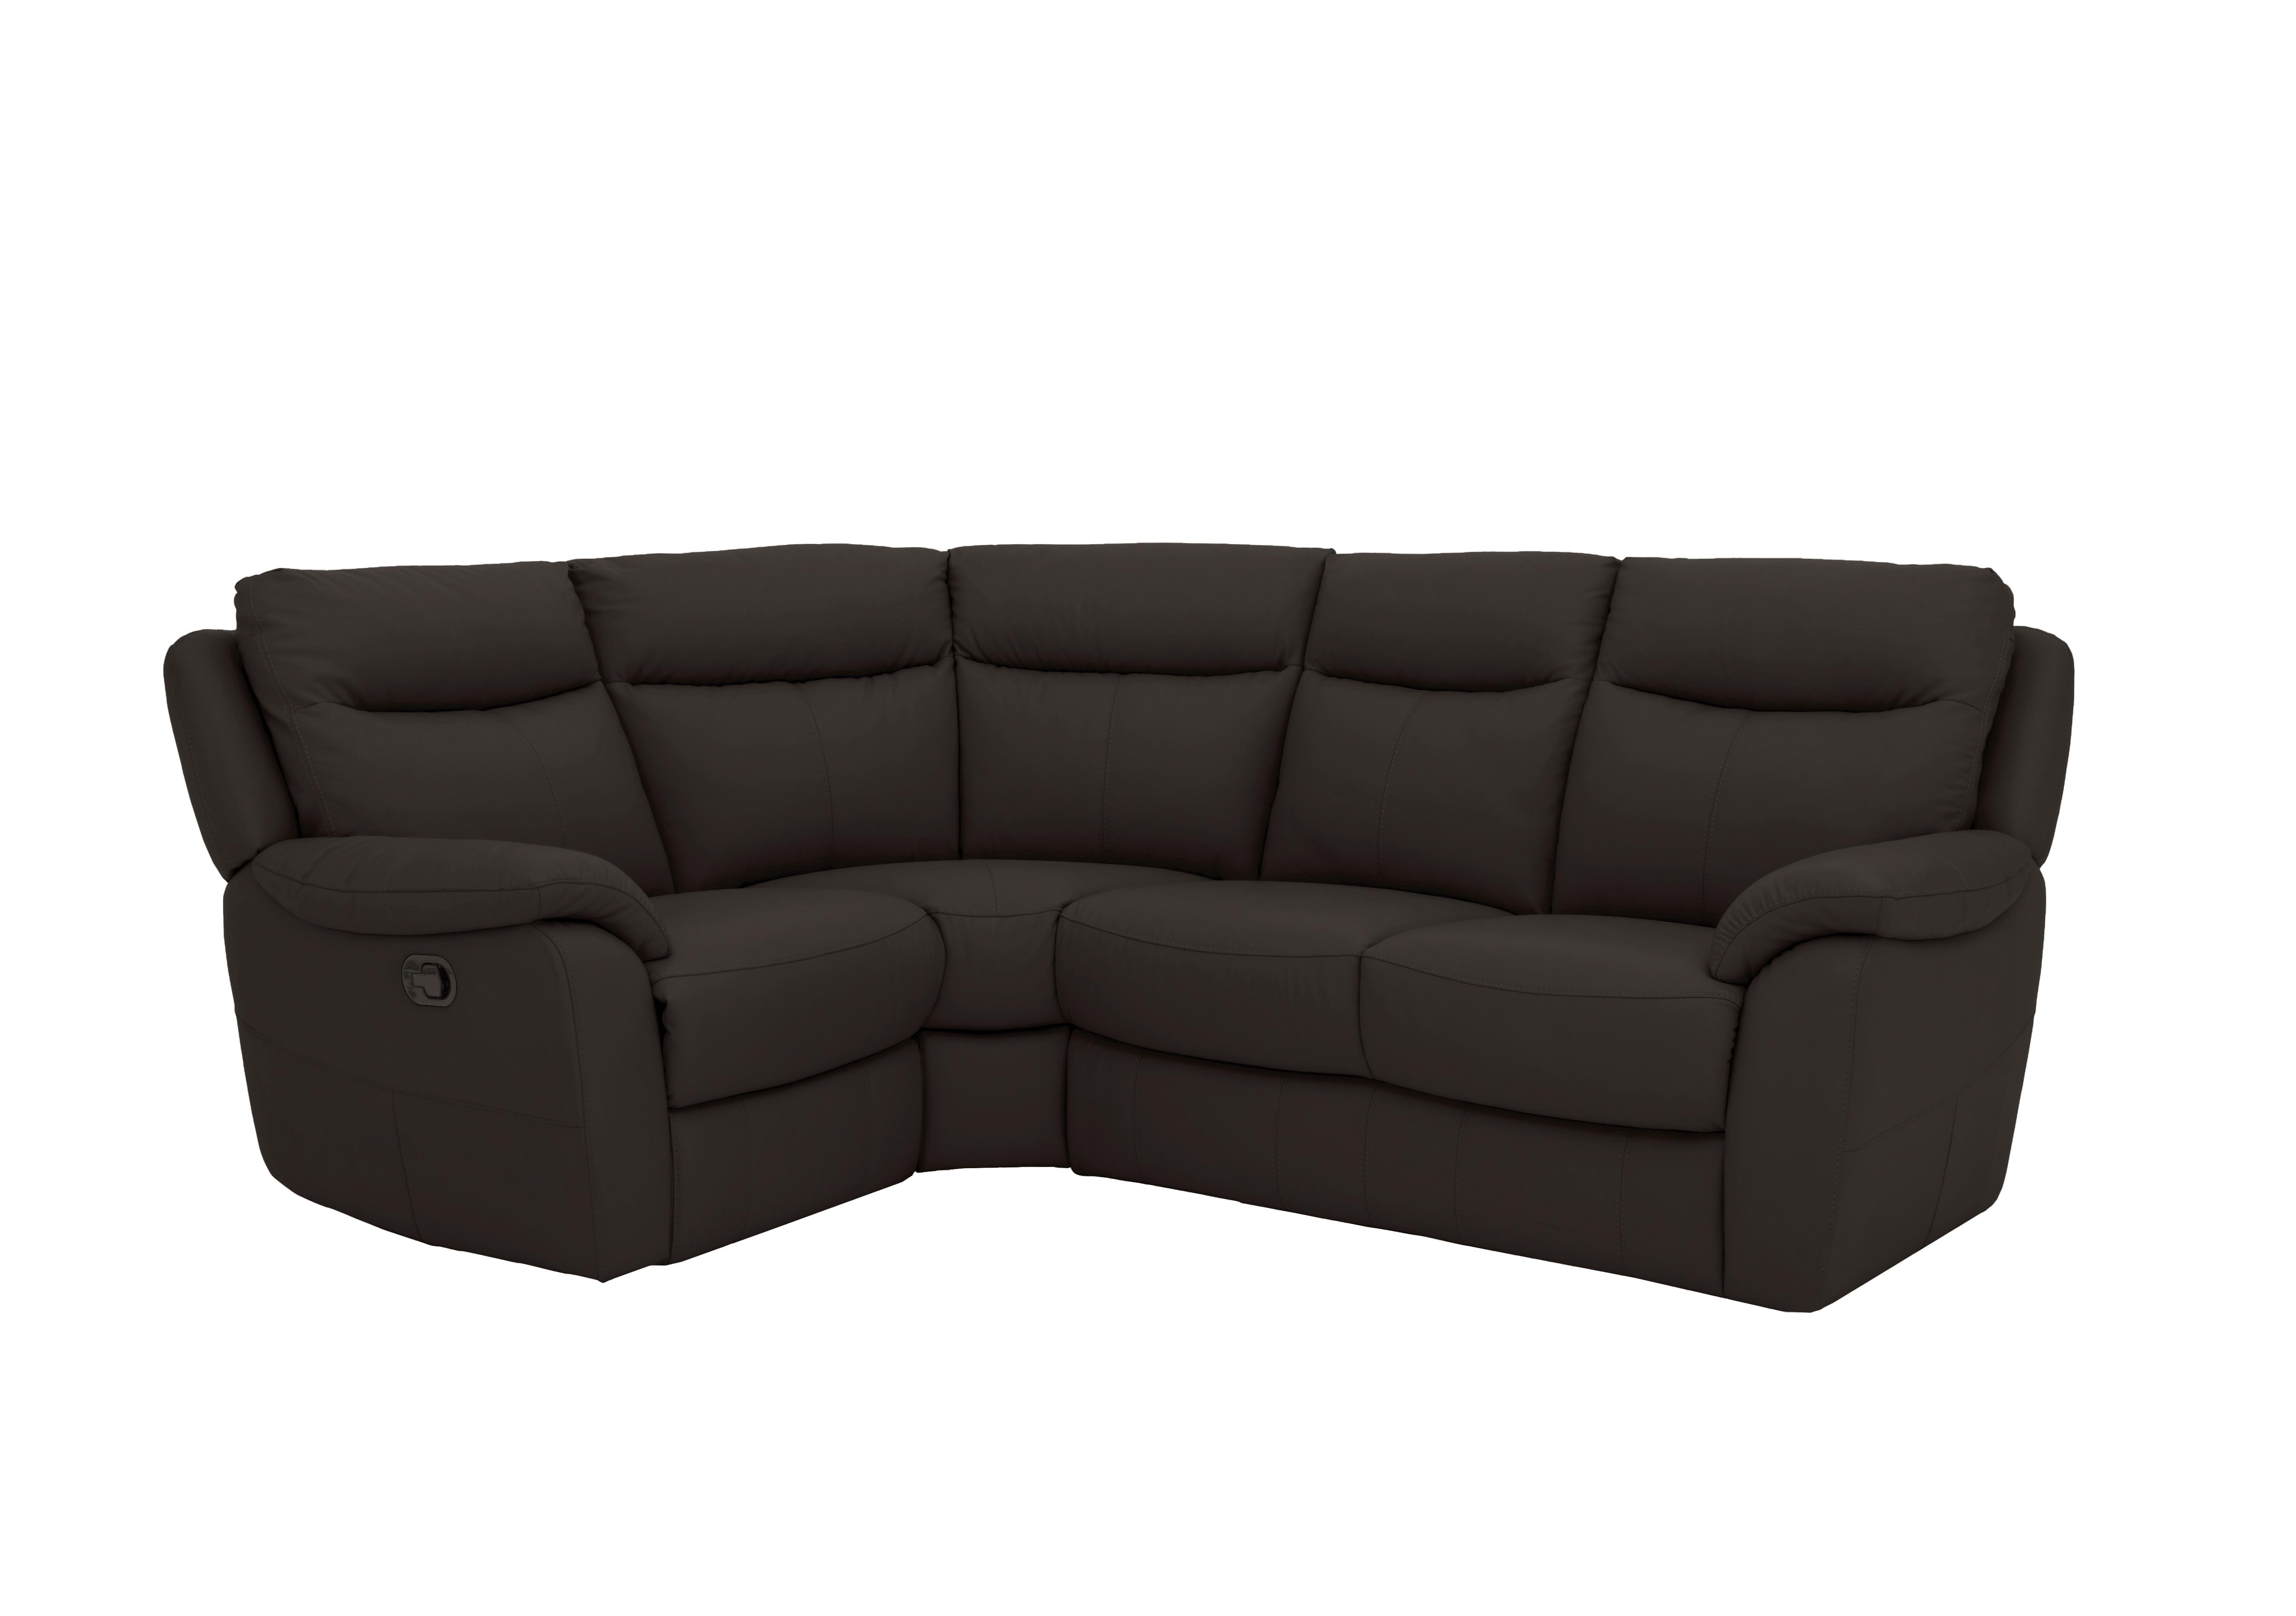 Snug Compact Leather Corner Sofa in Bv-1748 Dark Chocolate on Furniture Village